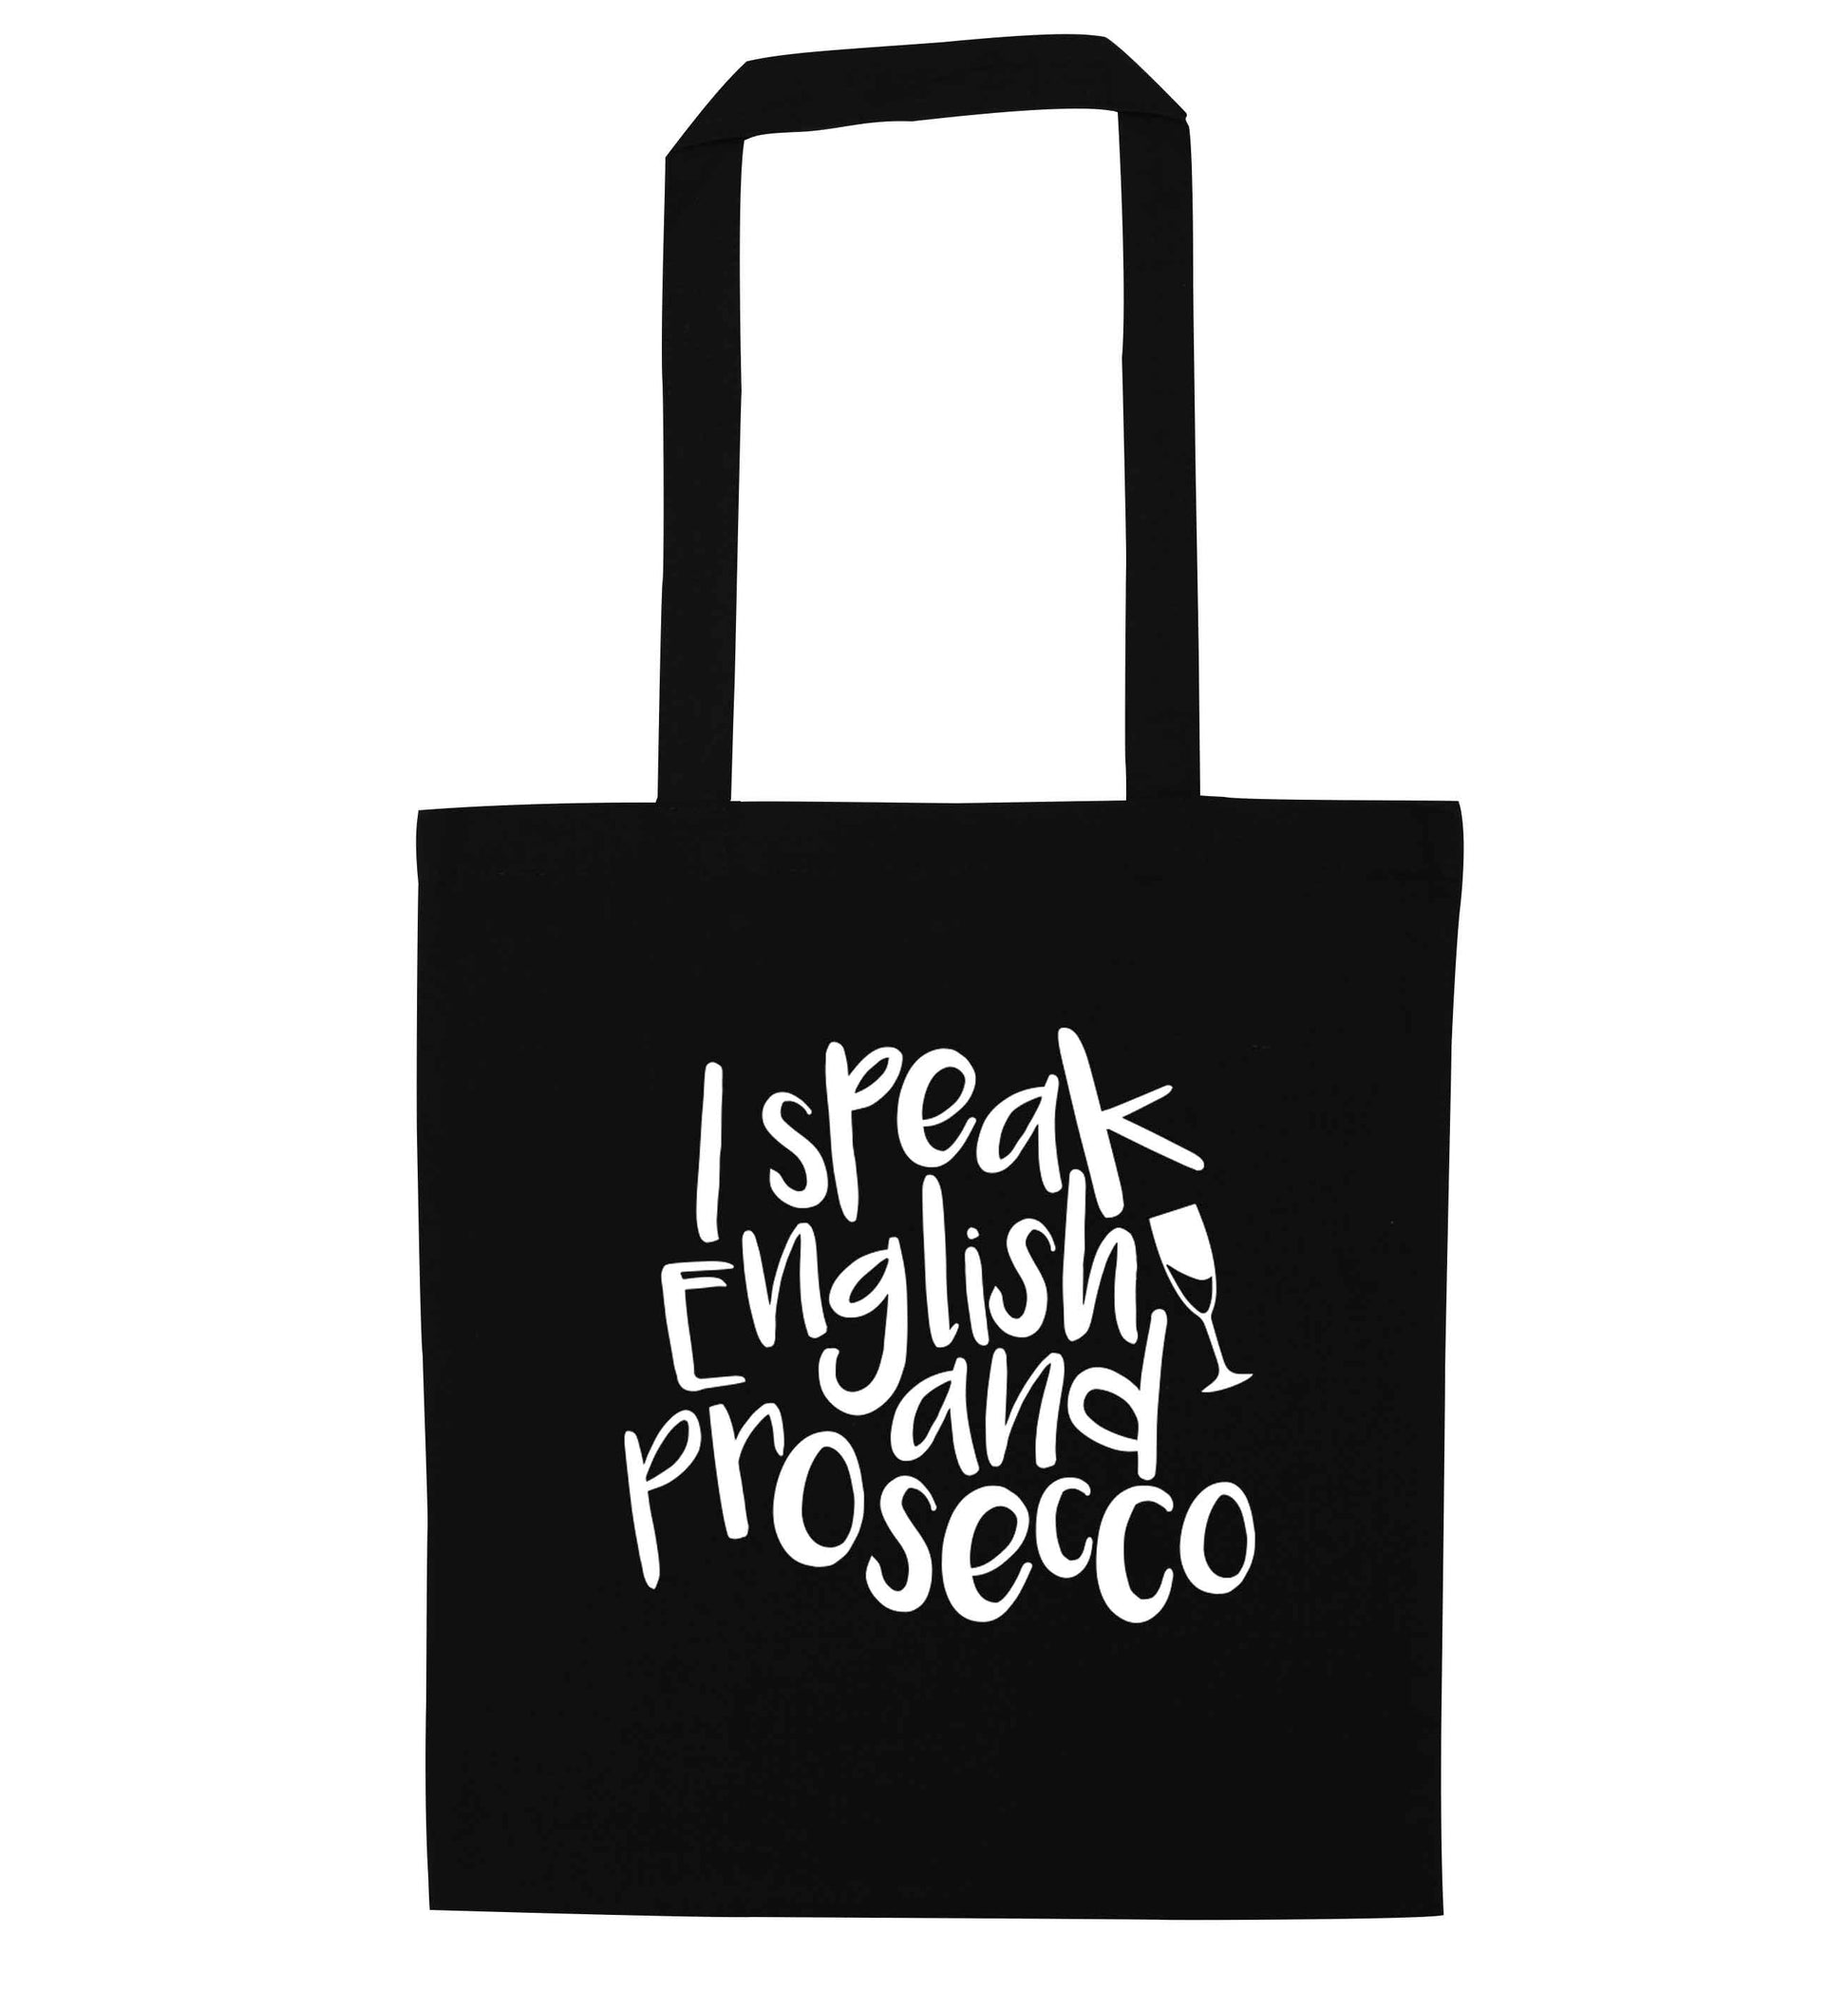 I speak English and prosecco black tote bag